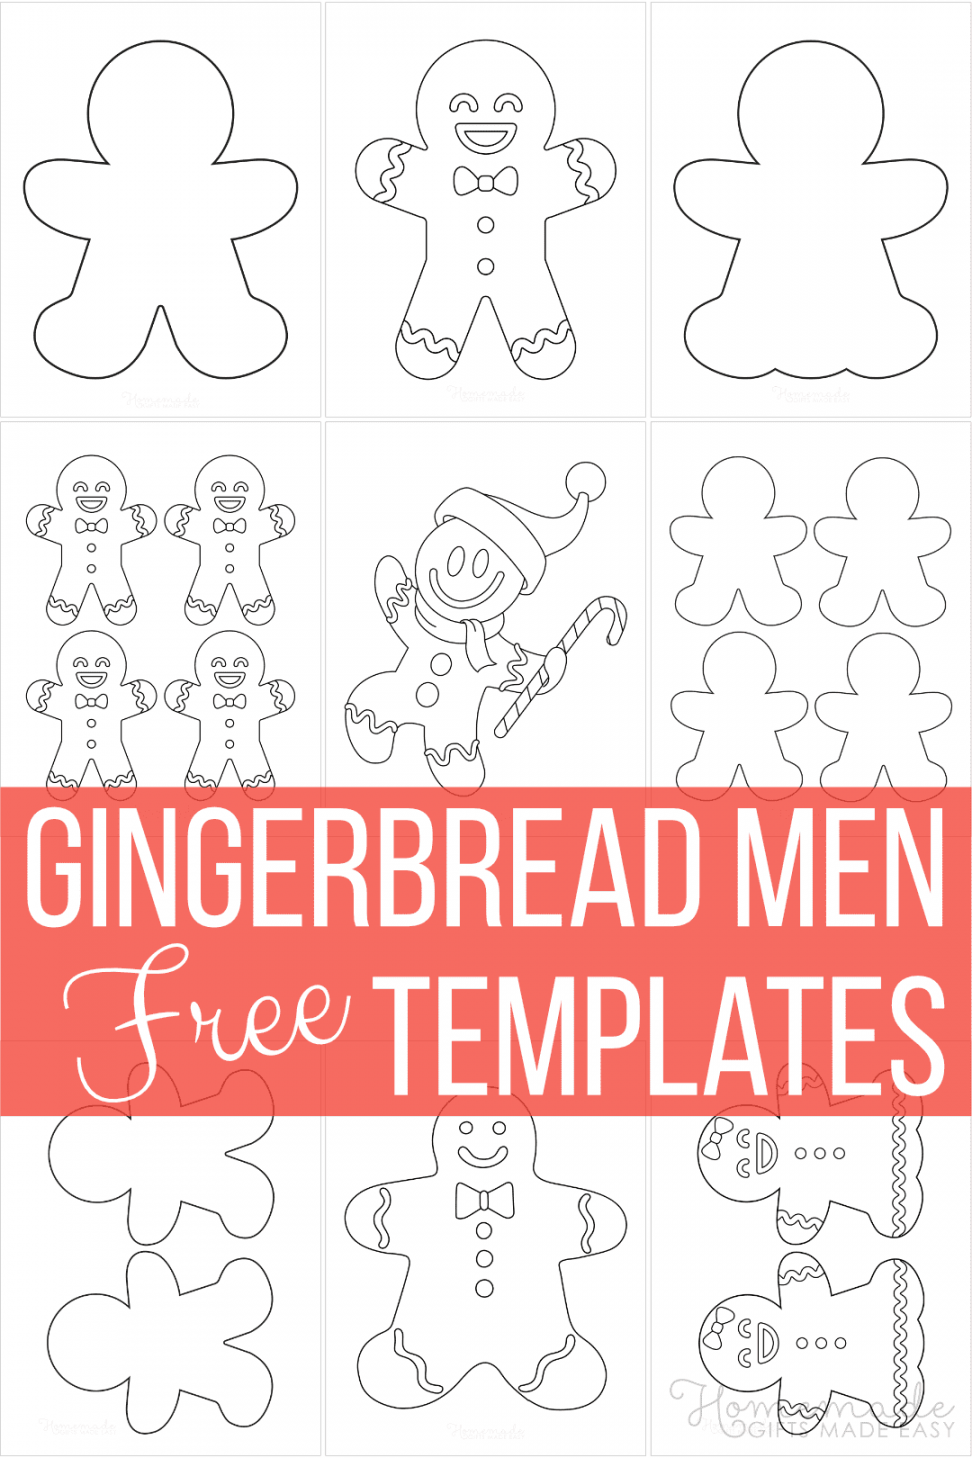 Free Printable Gingerbread Man Templates & Coloring Pages - FREE Printables - Gingerbread Man Printable Template